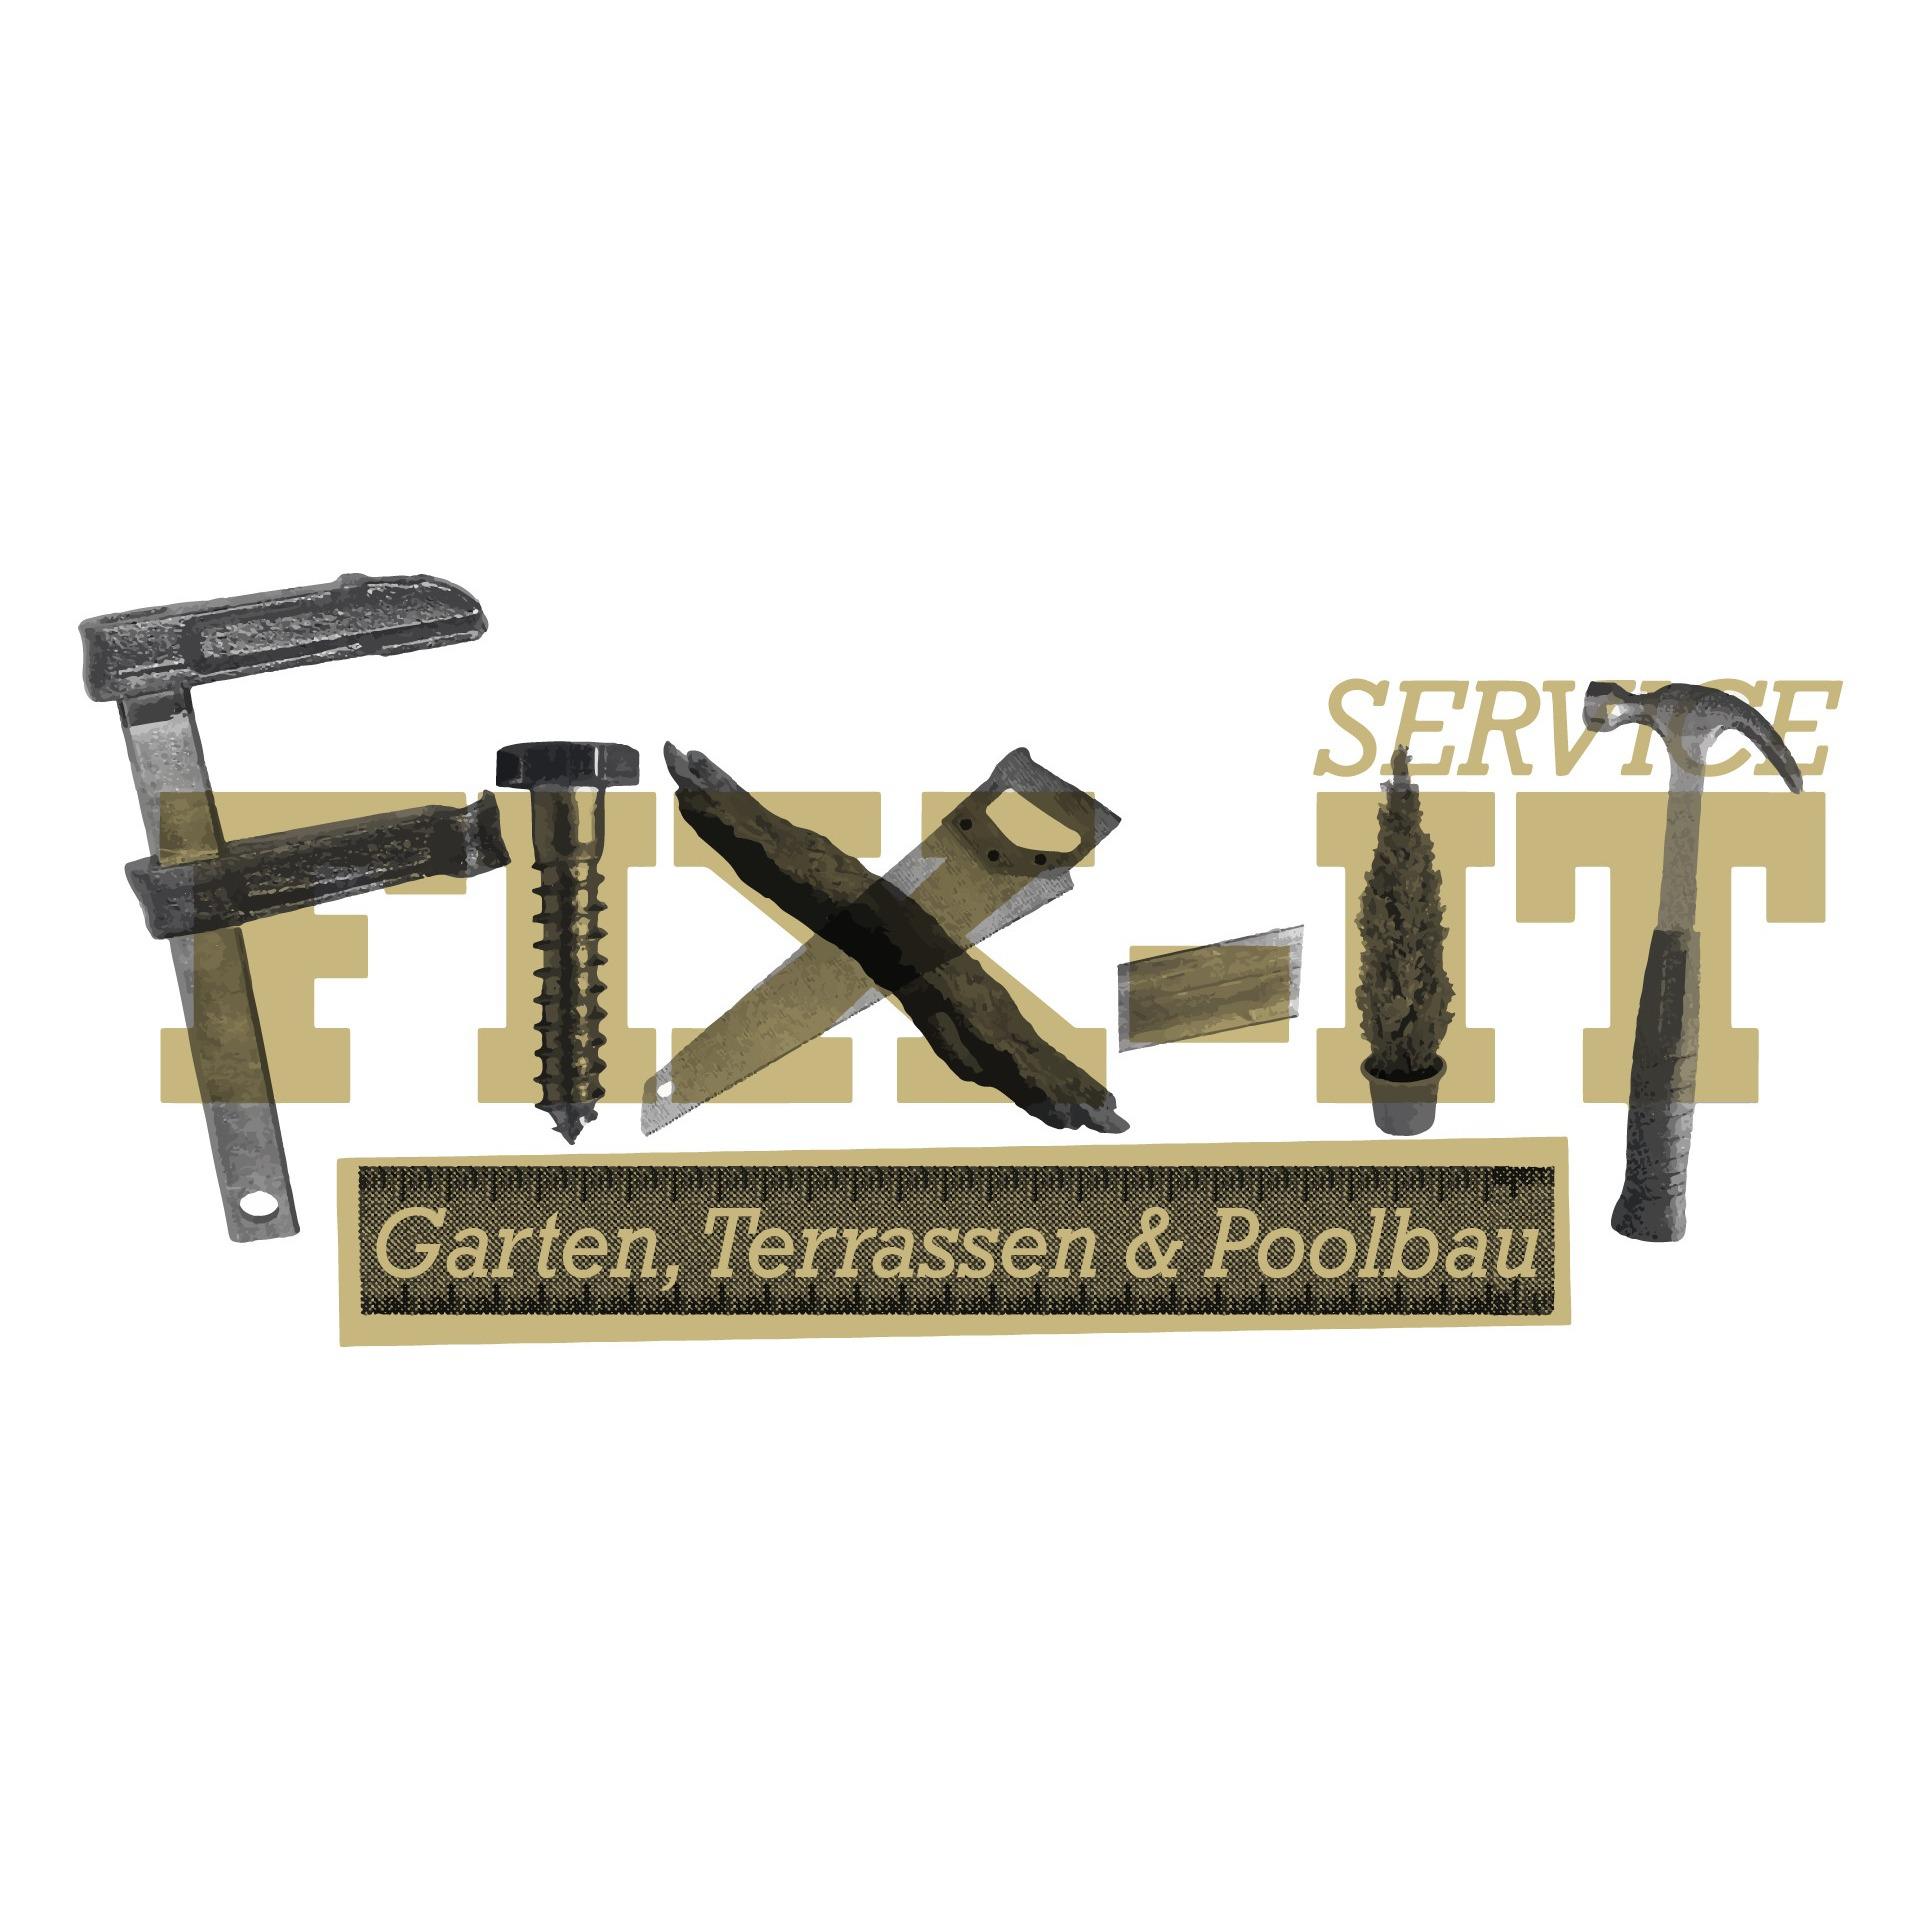 FIX IT SERVICE Garten- Landschafts, Terrassen & Poolbau in München - Logo